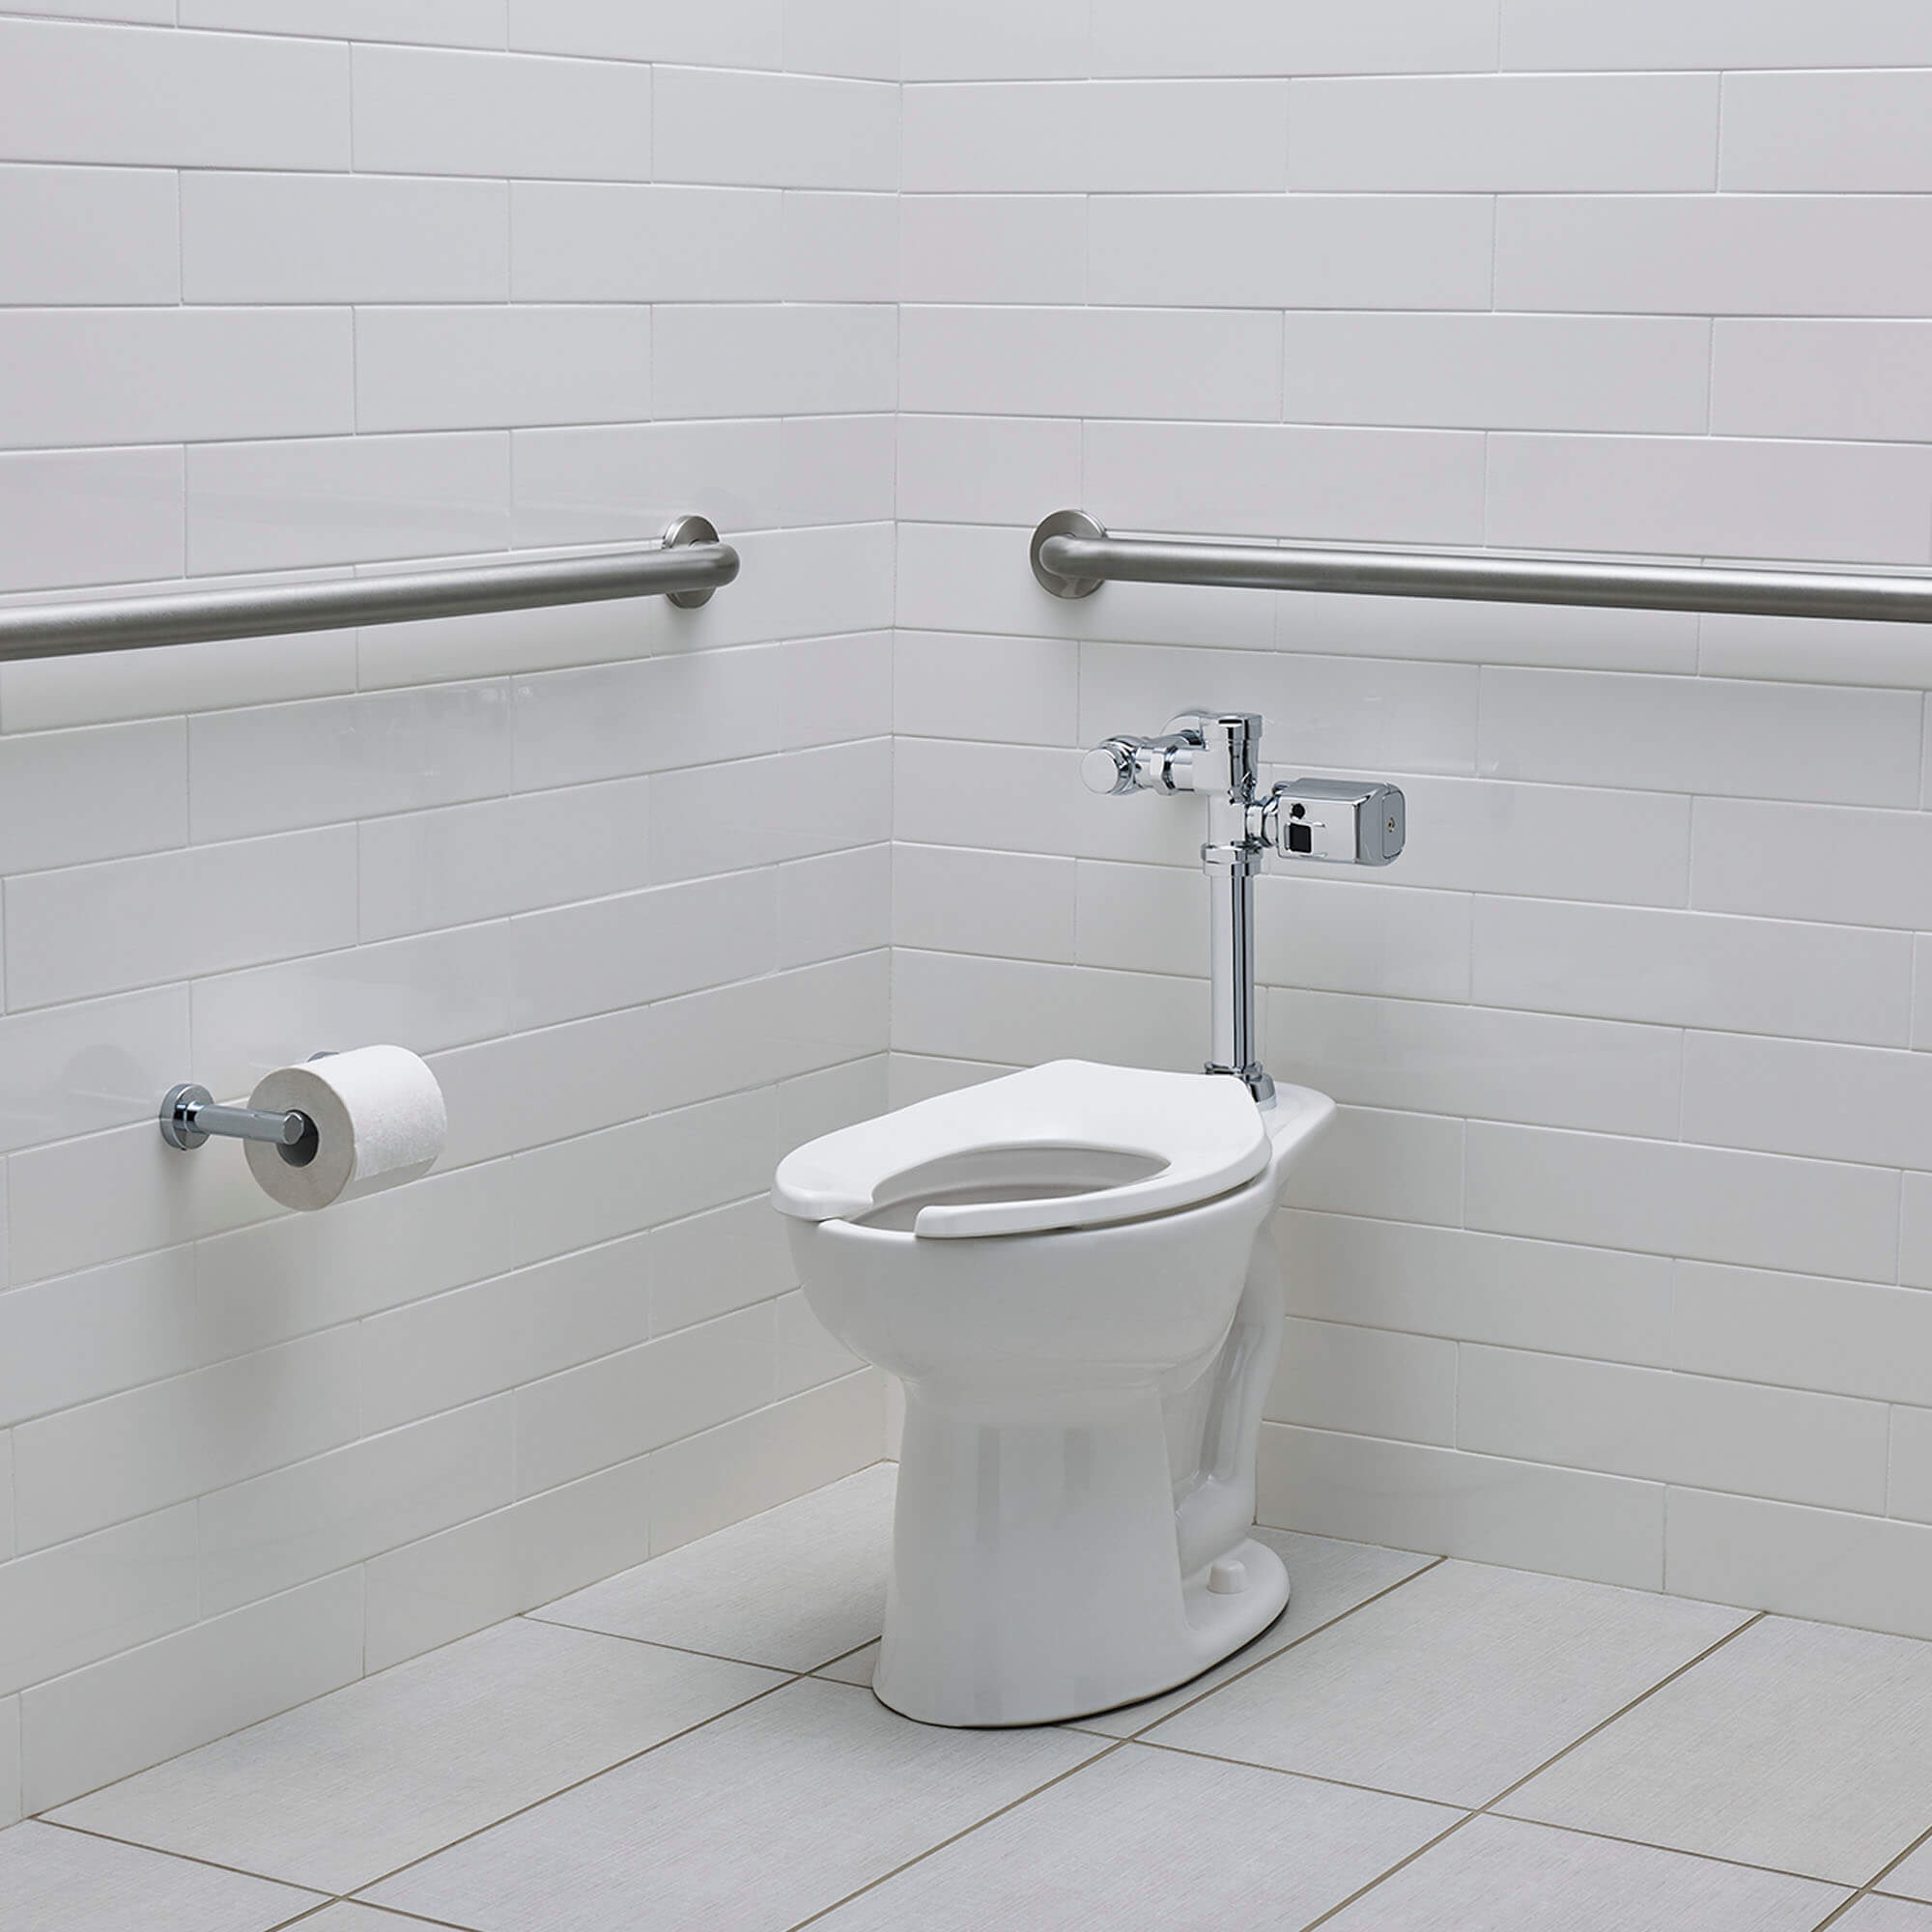 Toilet with Ultima Flushvalve